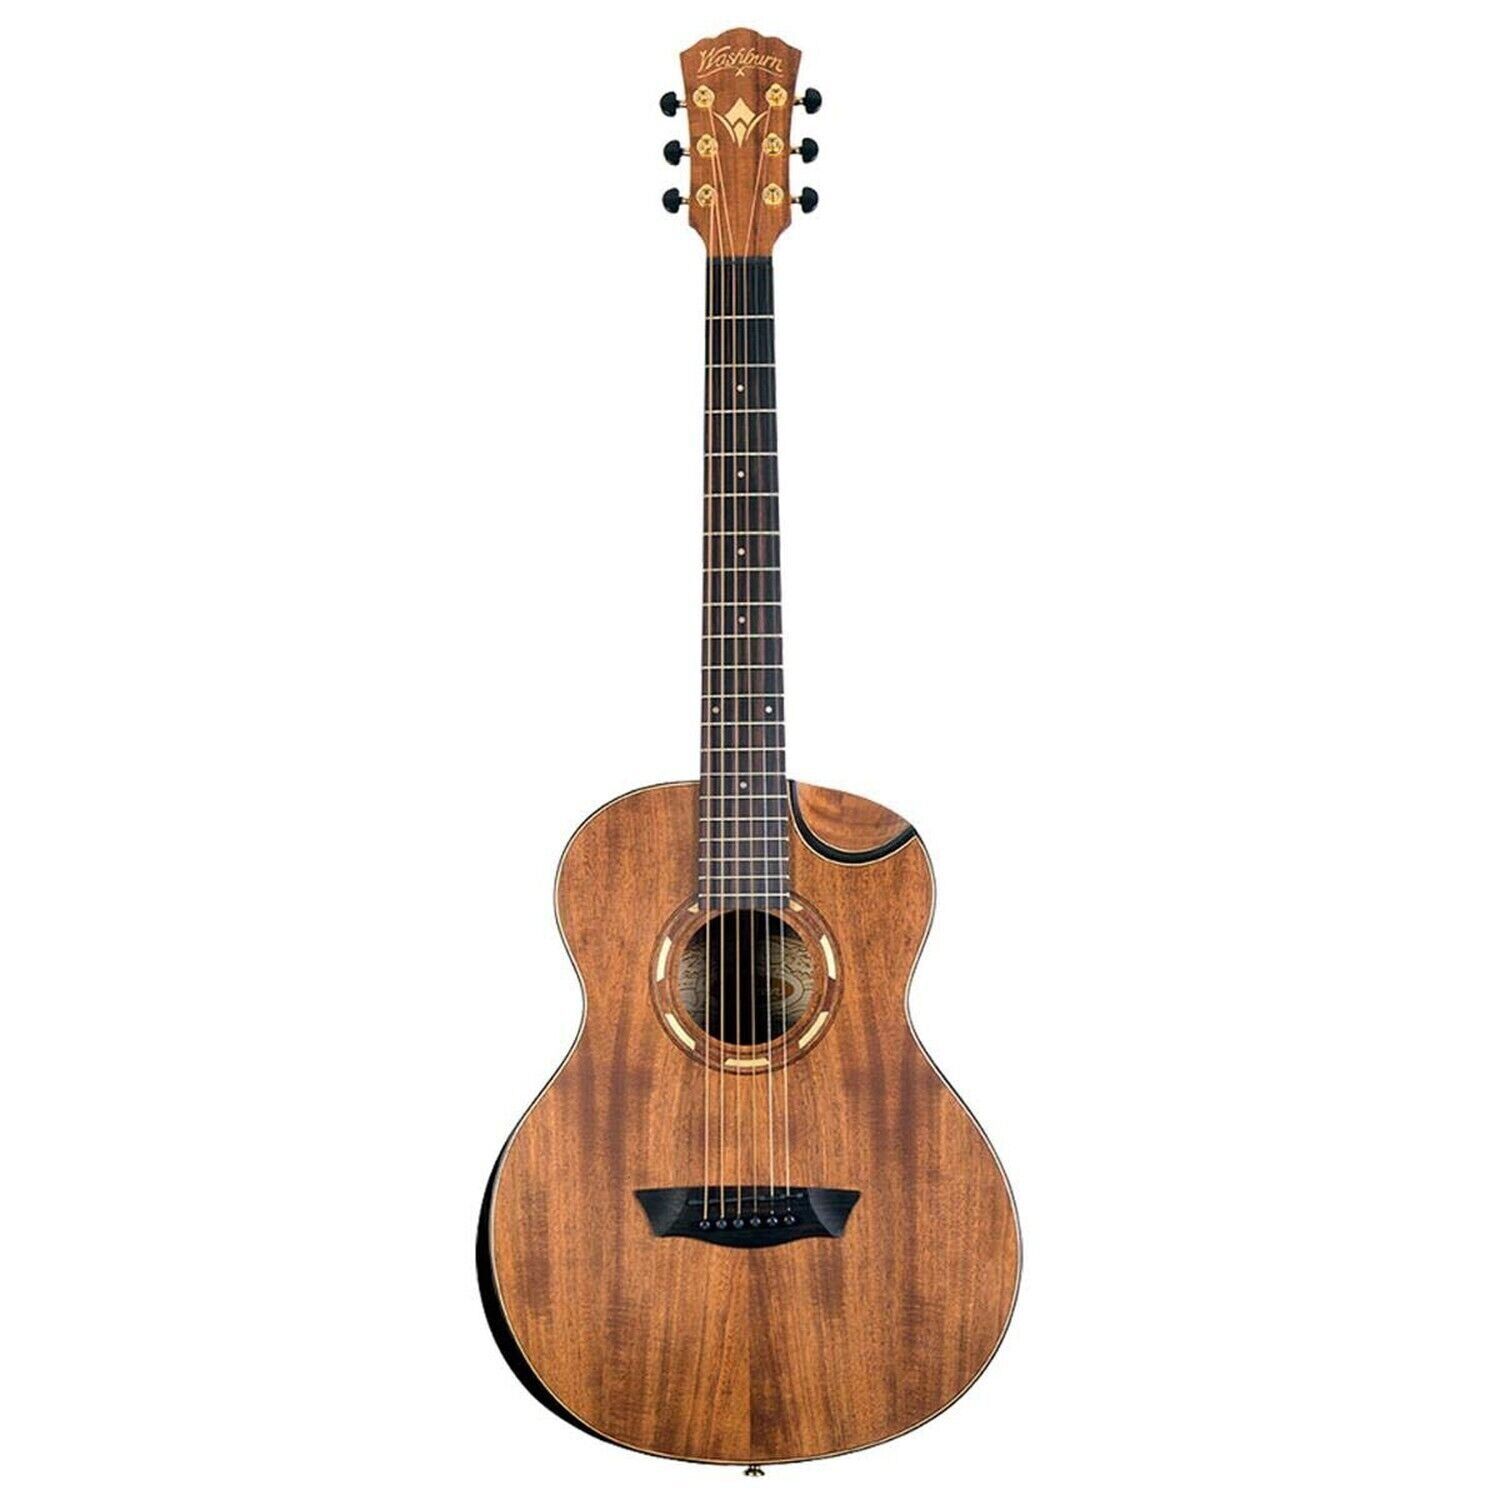 Washburn Comfort G-Mini 55 Koa Travel Size Acoustic Guitar, Natural